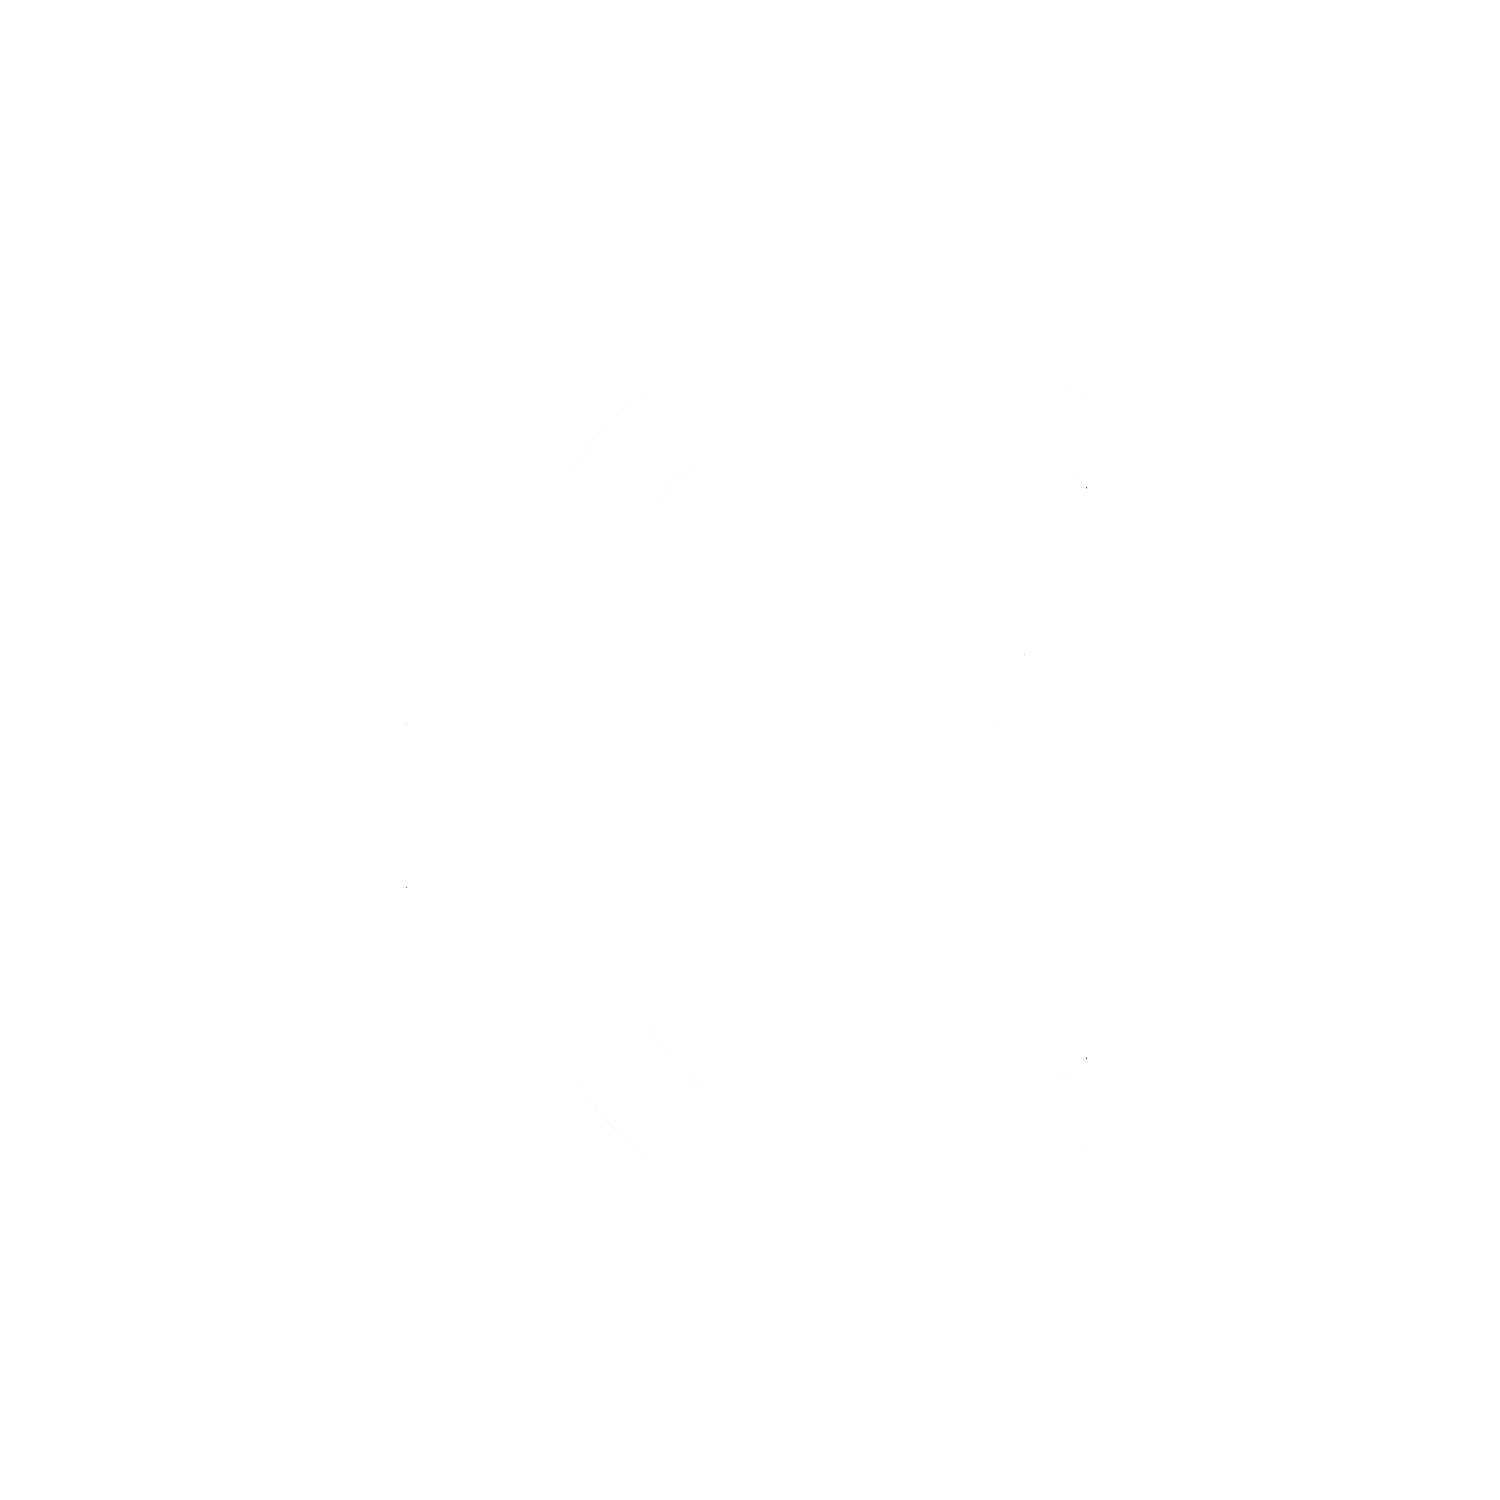 Icone Euro